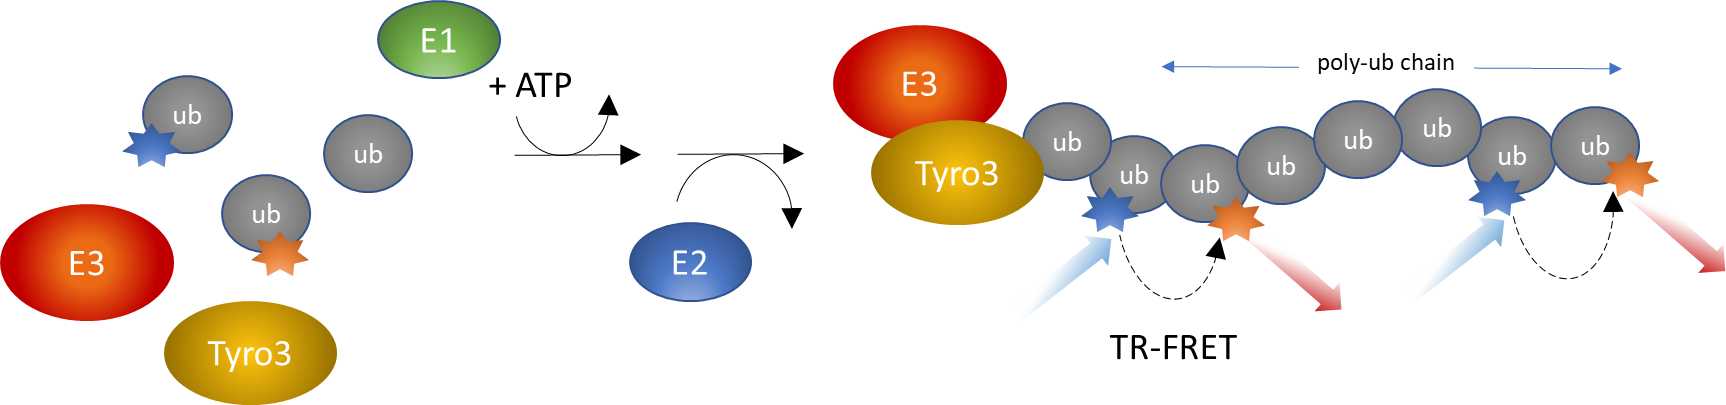 CBL-B-driven Tyro3 Ubiquitination Intrachain TR-FRET